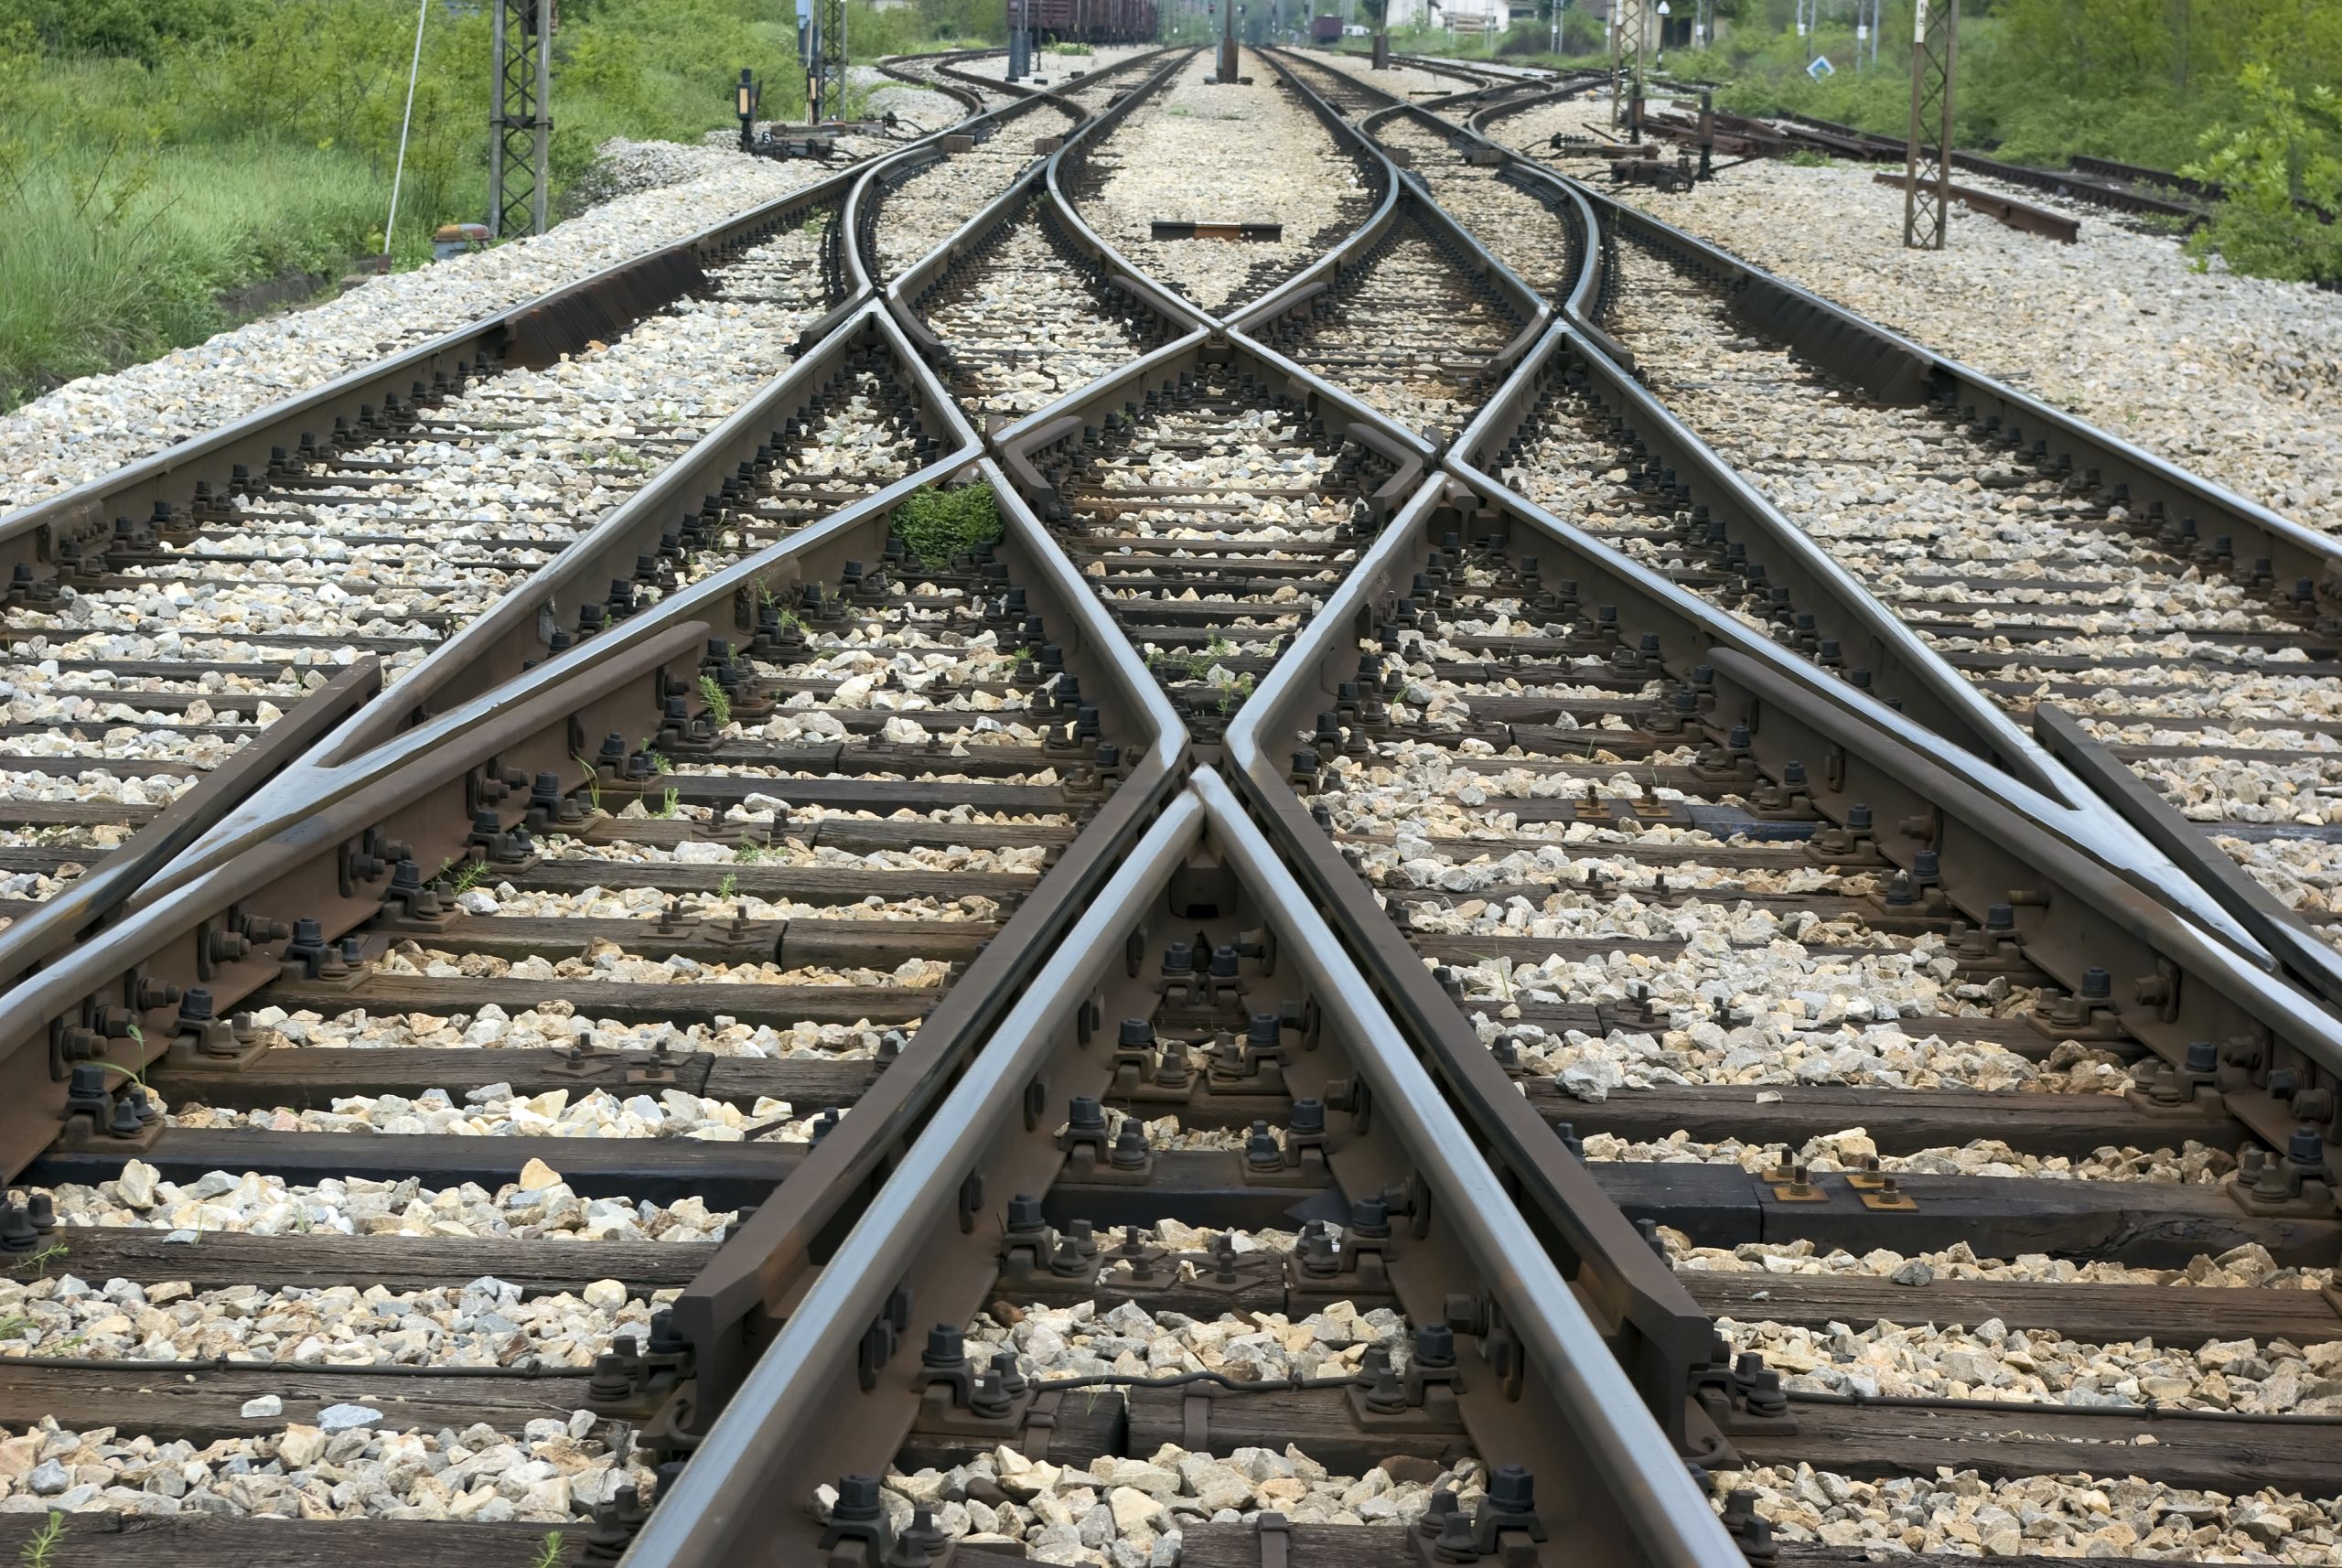 Converging train tracks